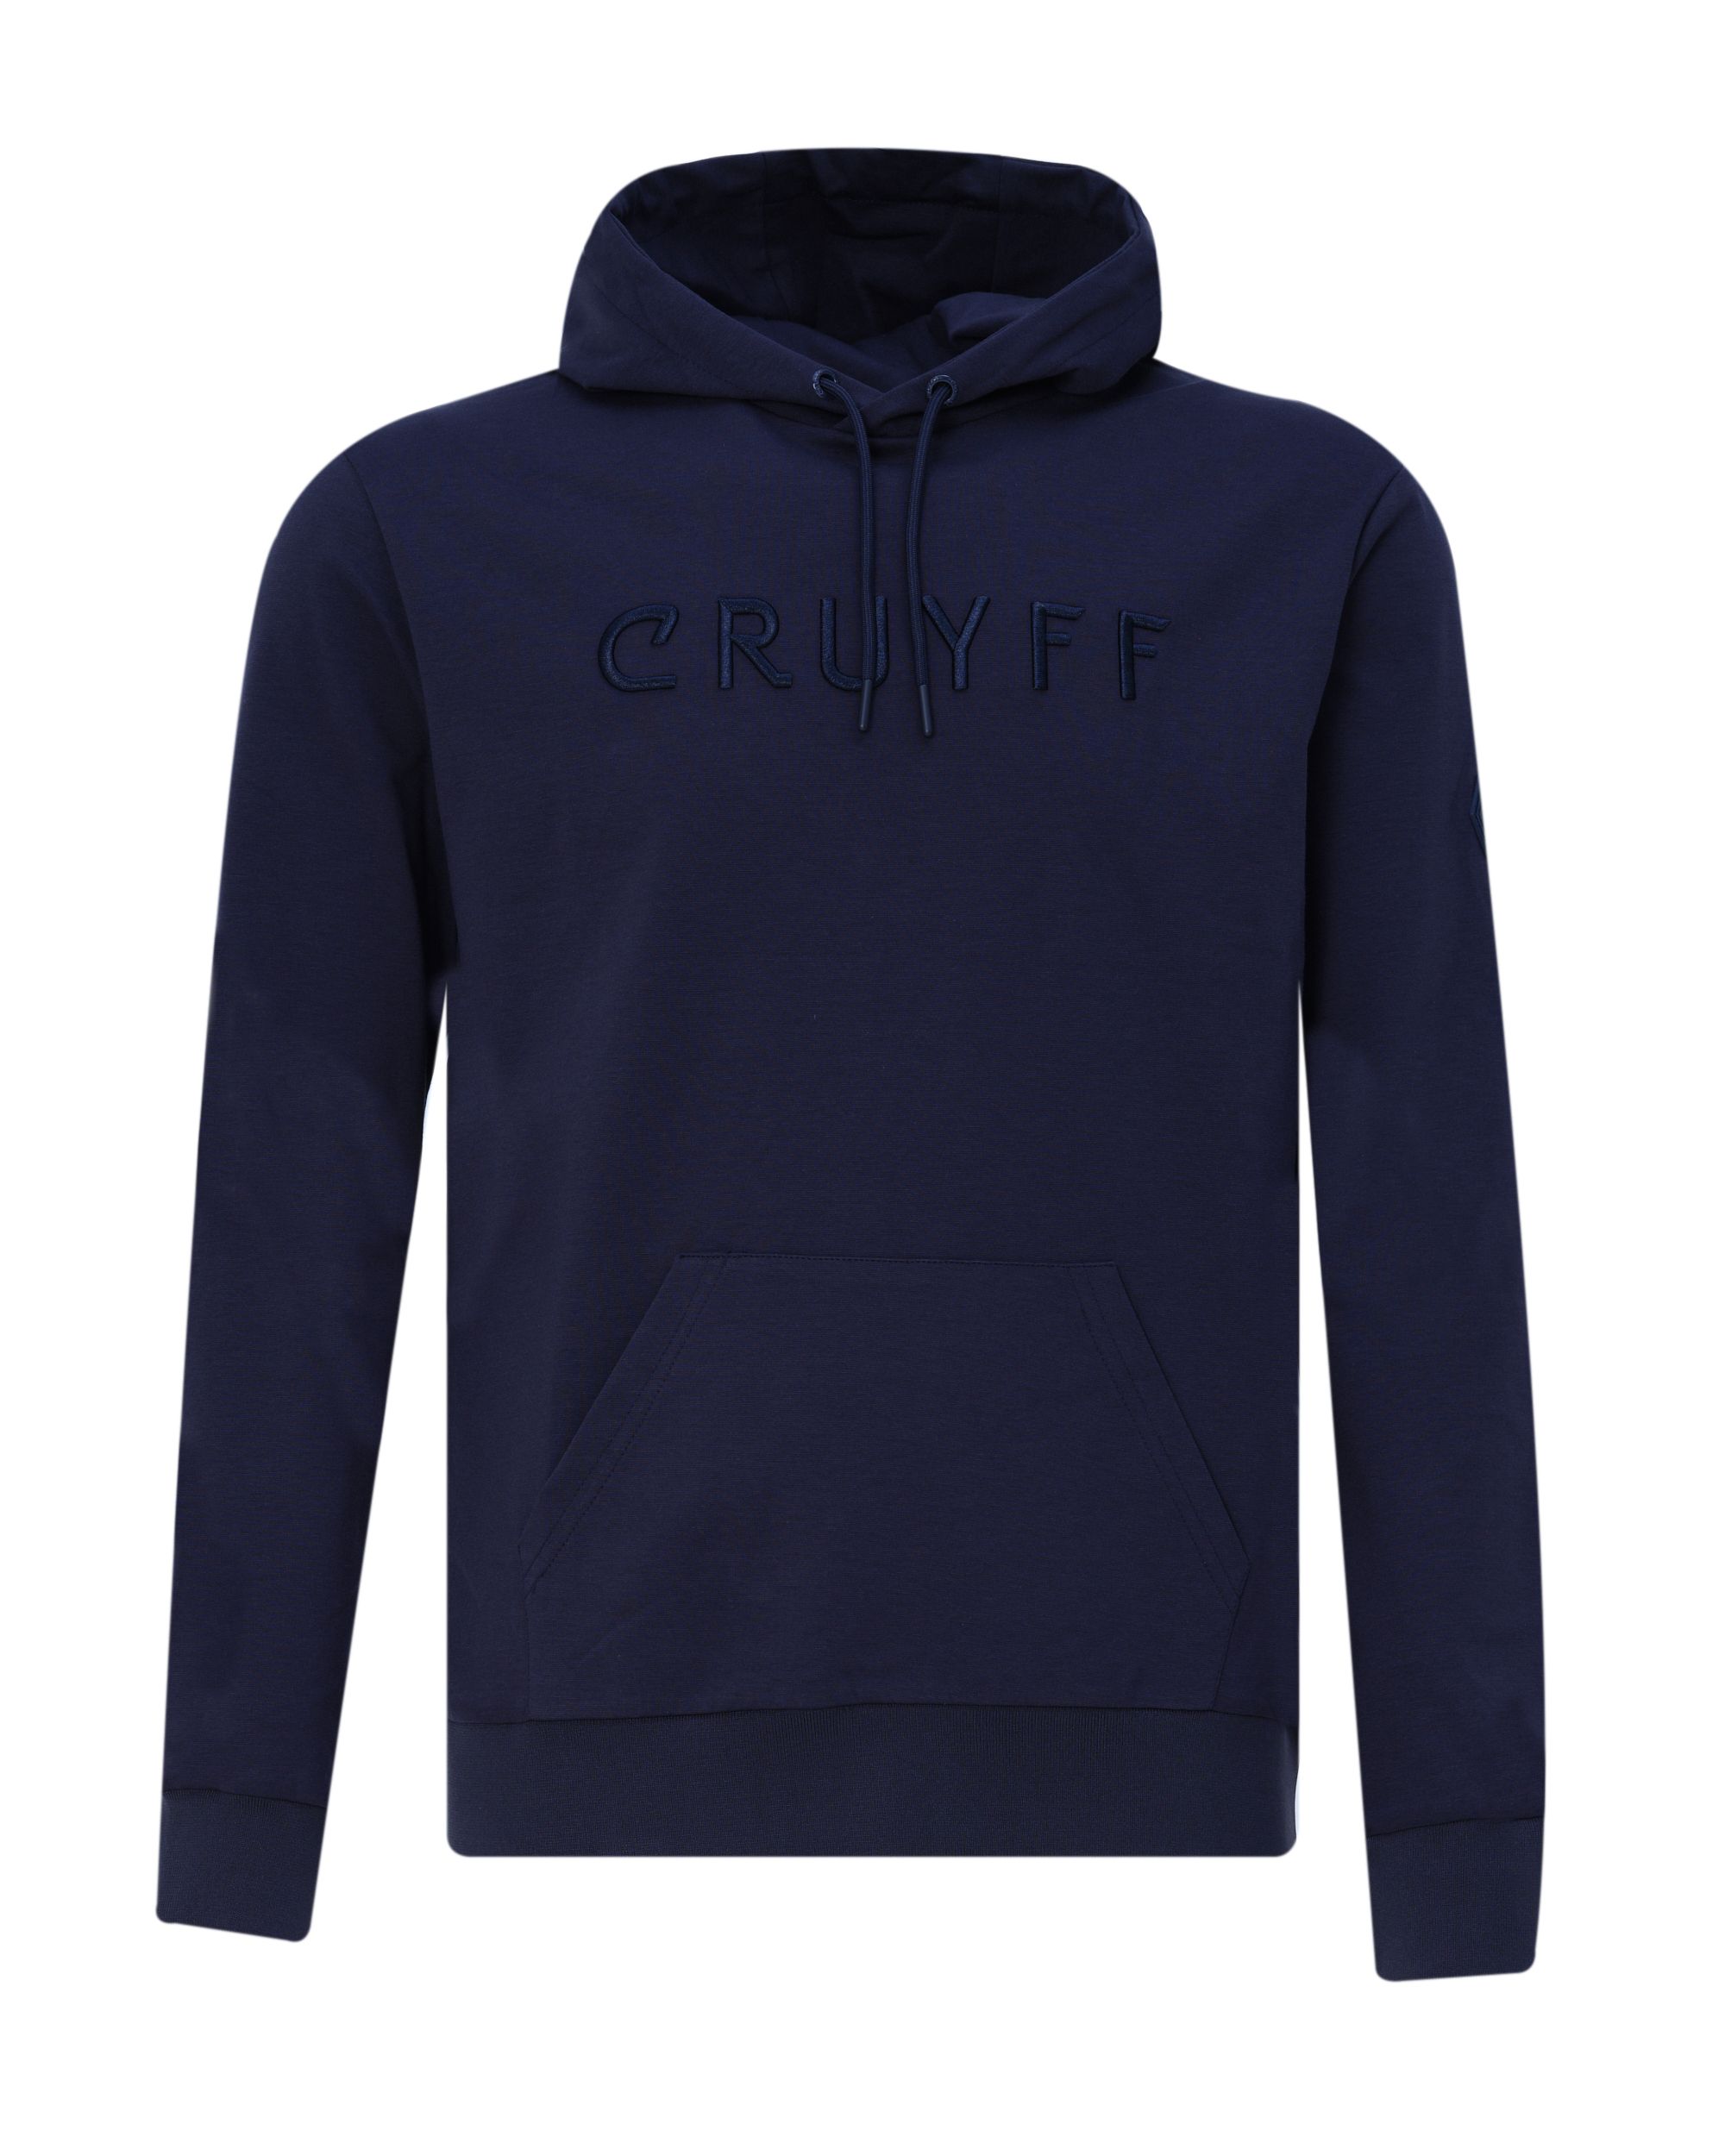 Cruyff Toretta Hoodie Donker blauw 078812-002-L